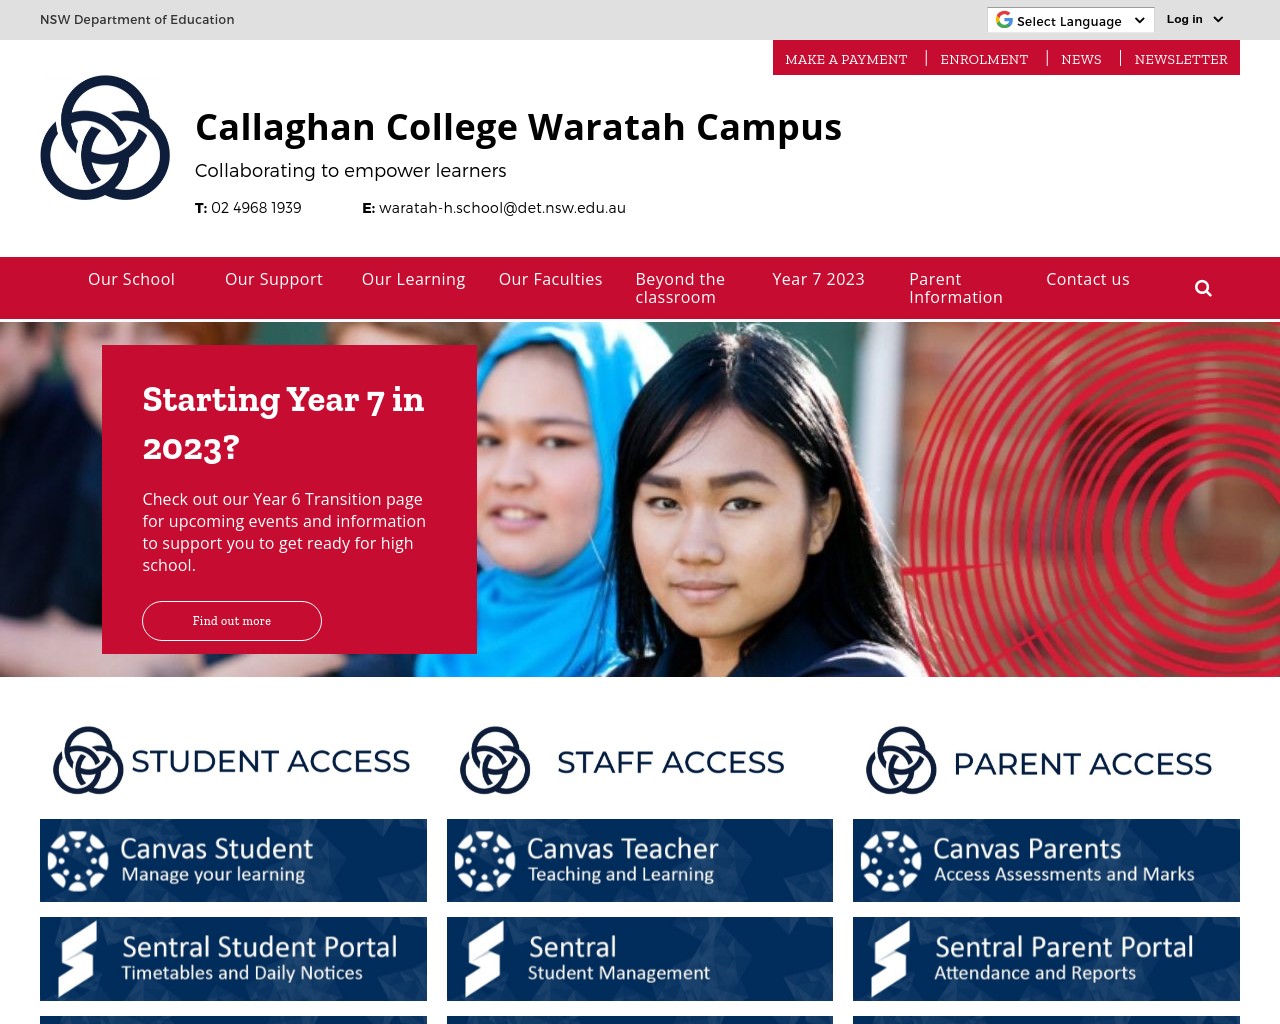 Callaghan College Waratah